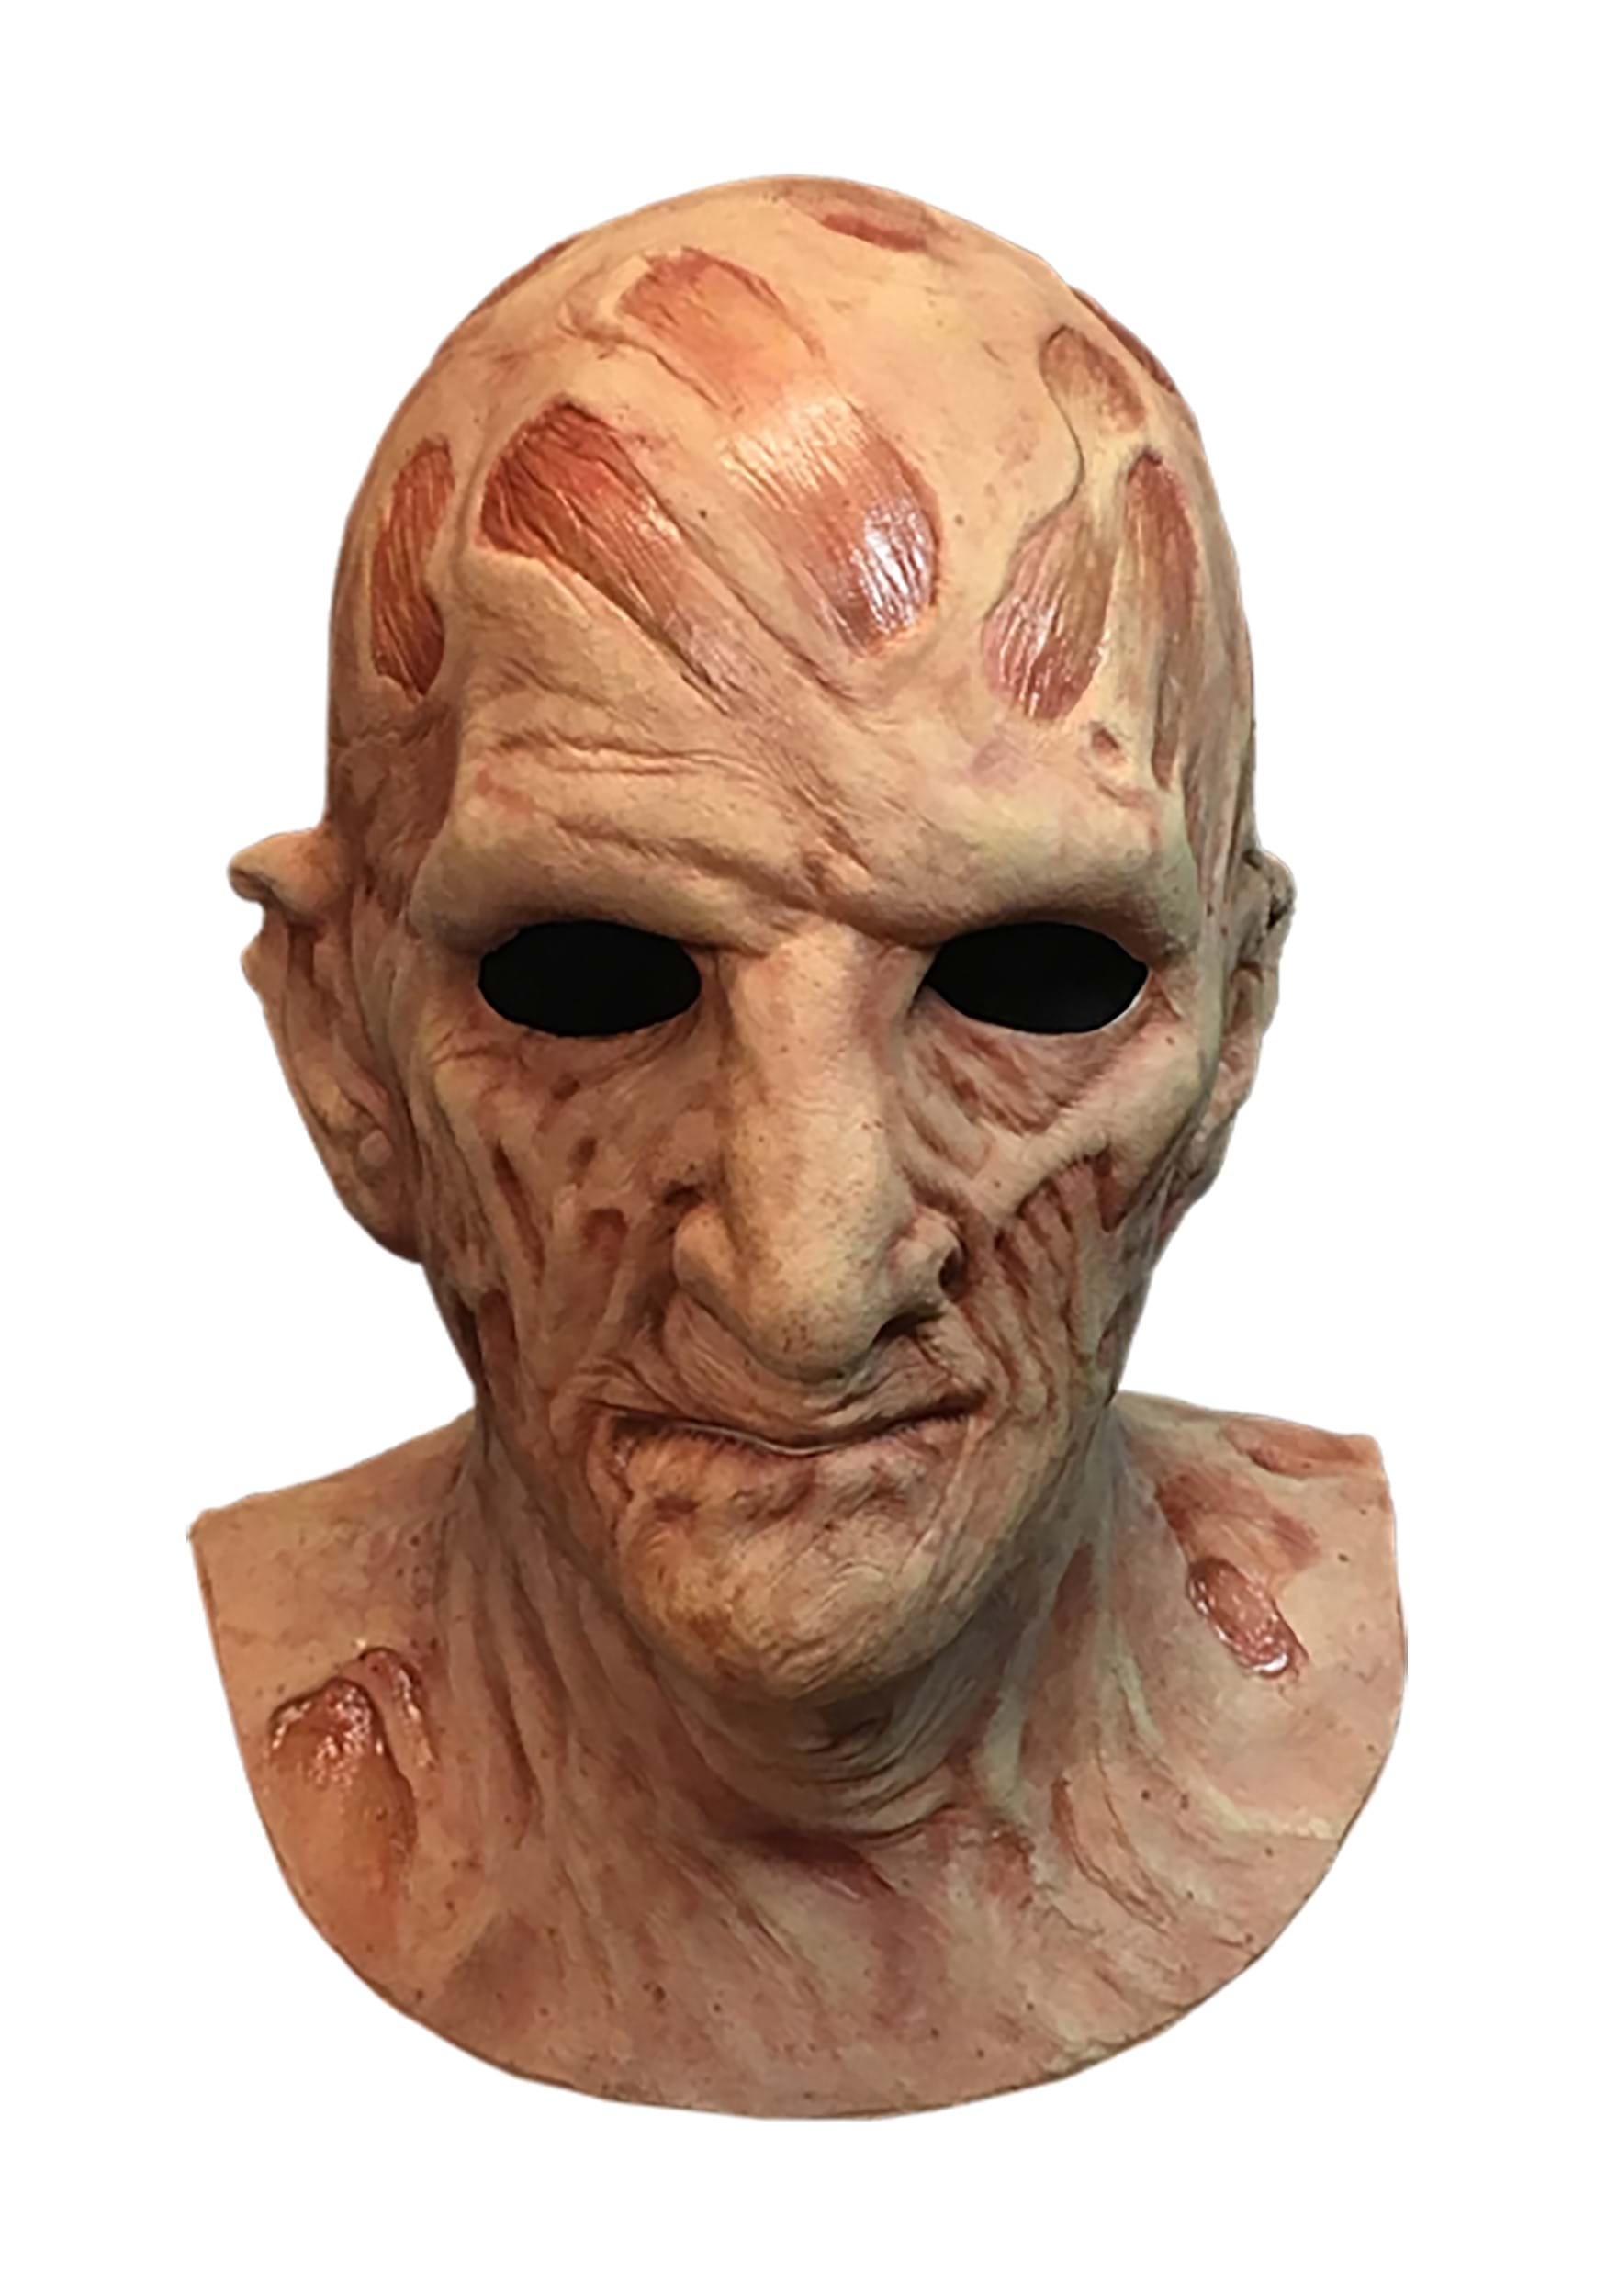 A Nightmare on Elm Street: Freddy’s Revenge Mask